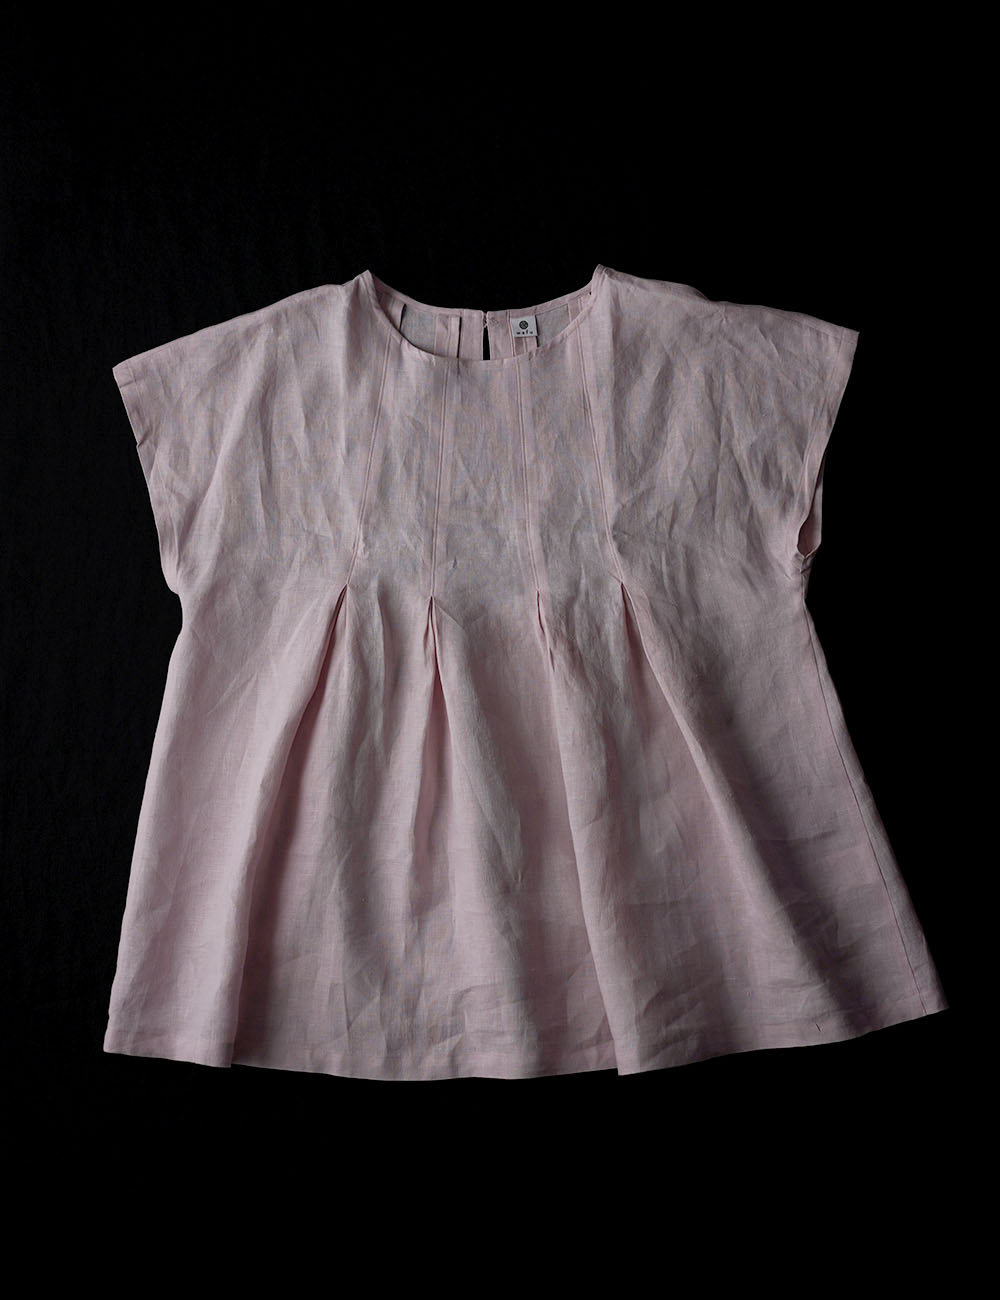 【wafu】雅亜麻 Double-pleated blouse 2重ヒダのリネンブラウス 薄地 / 桜色(さくらいろ) t039a-sak1